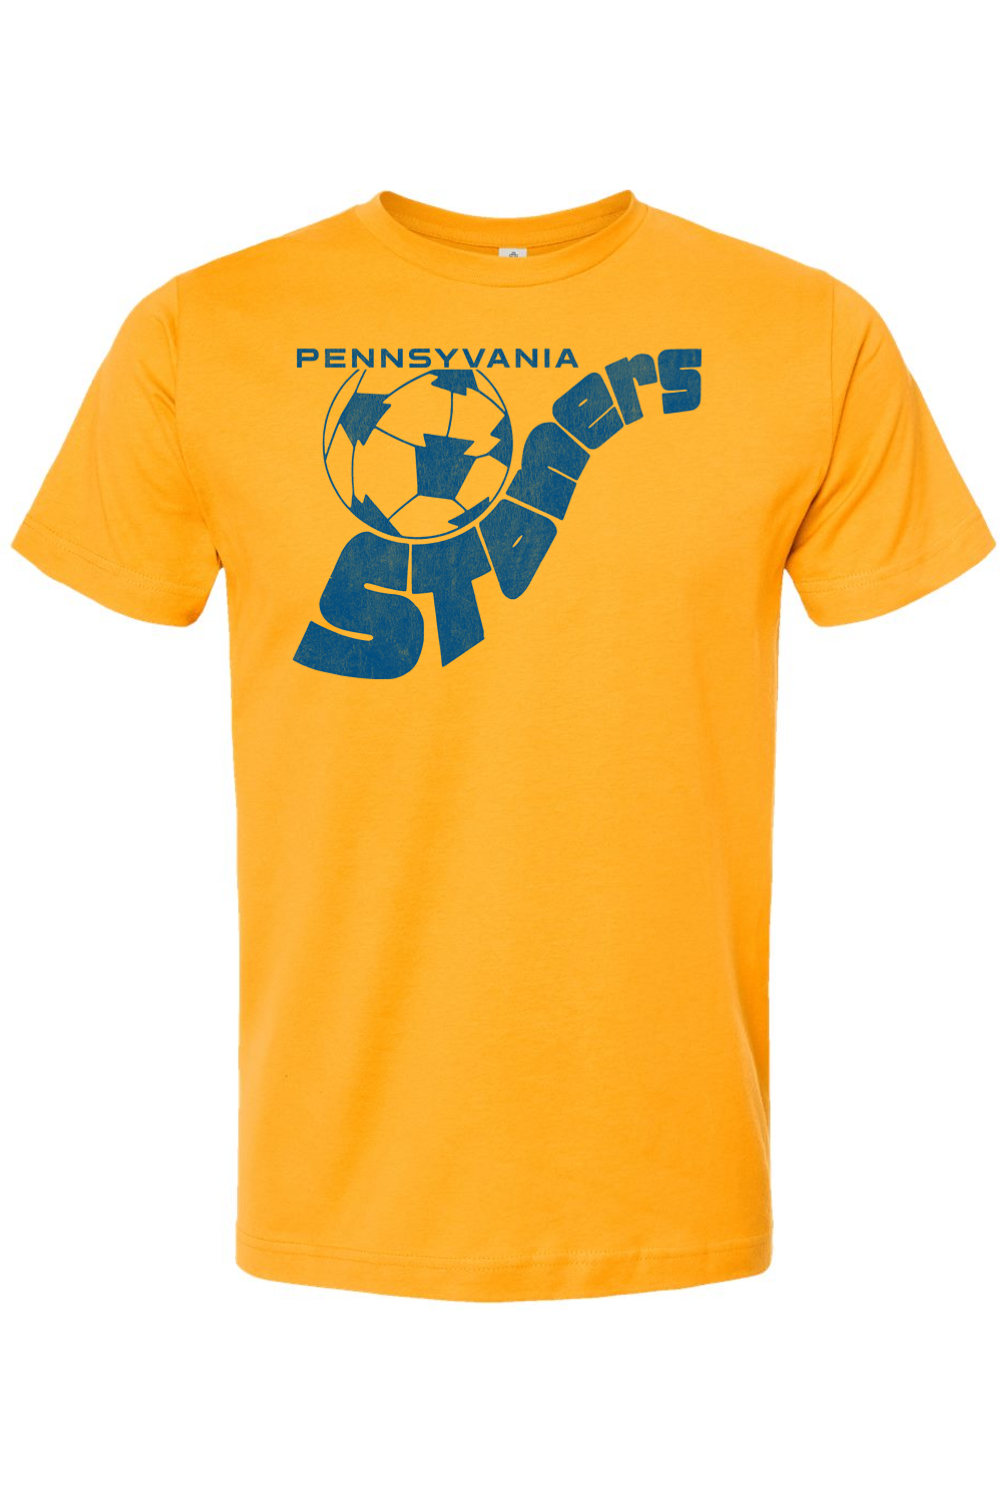 Pennsylvania Stoners Soccer - Yinzylvania